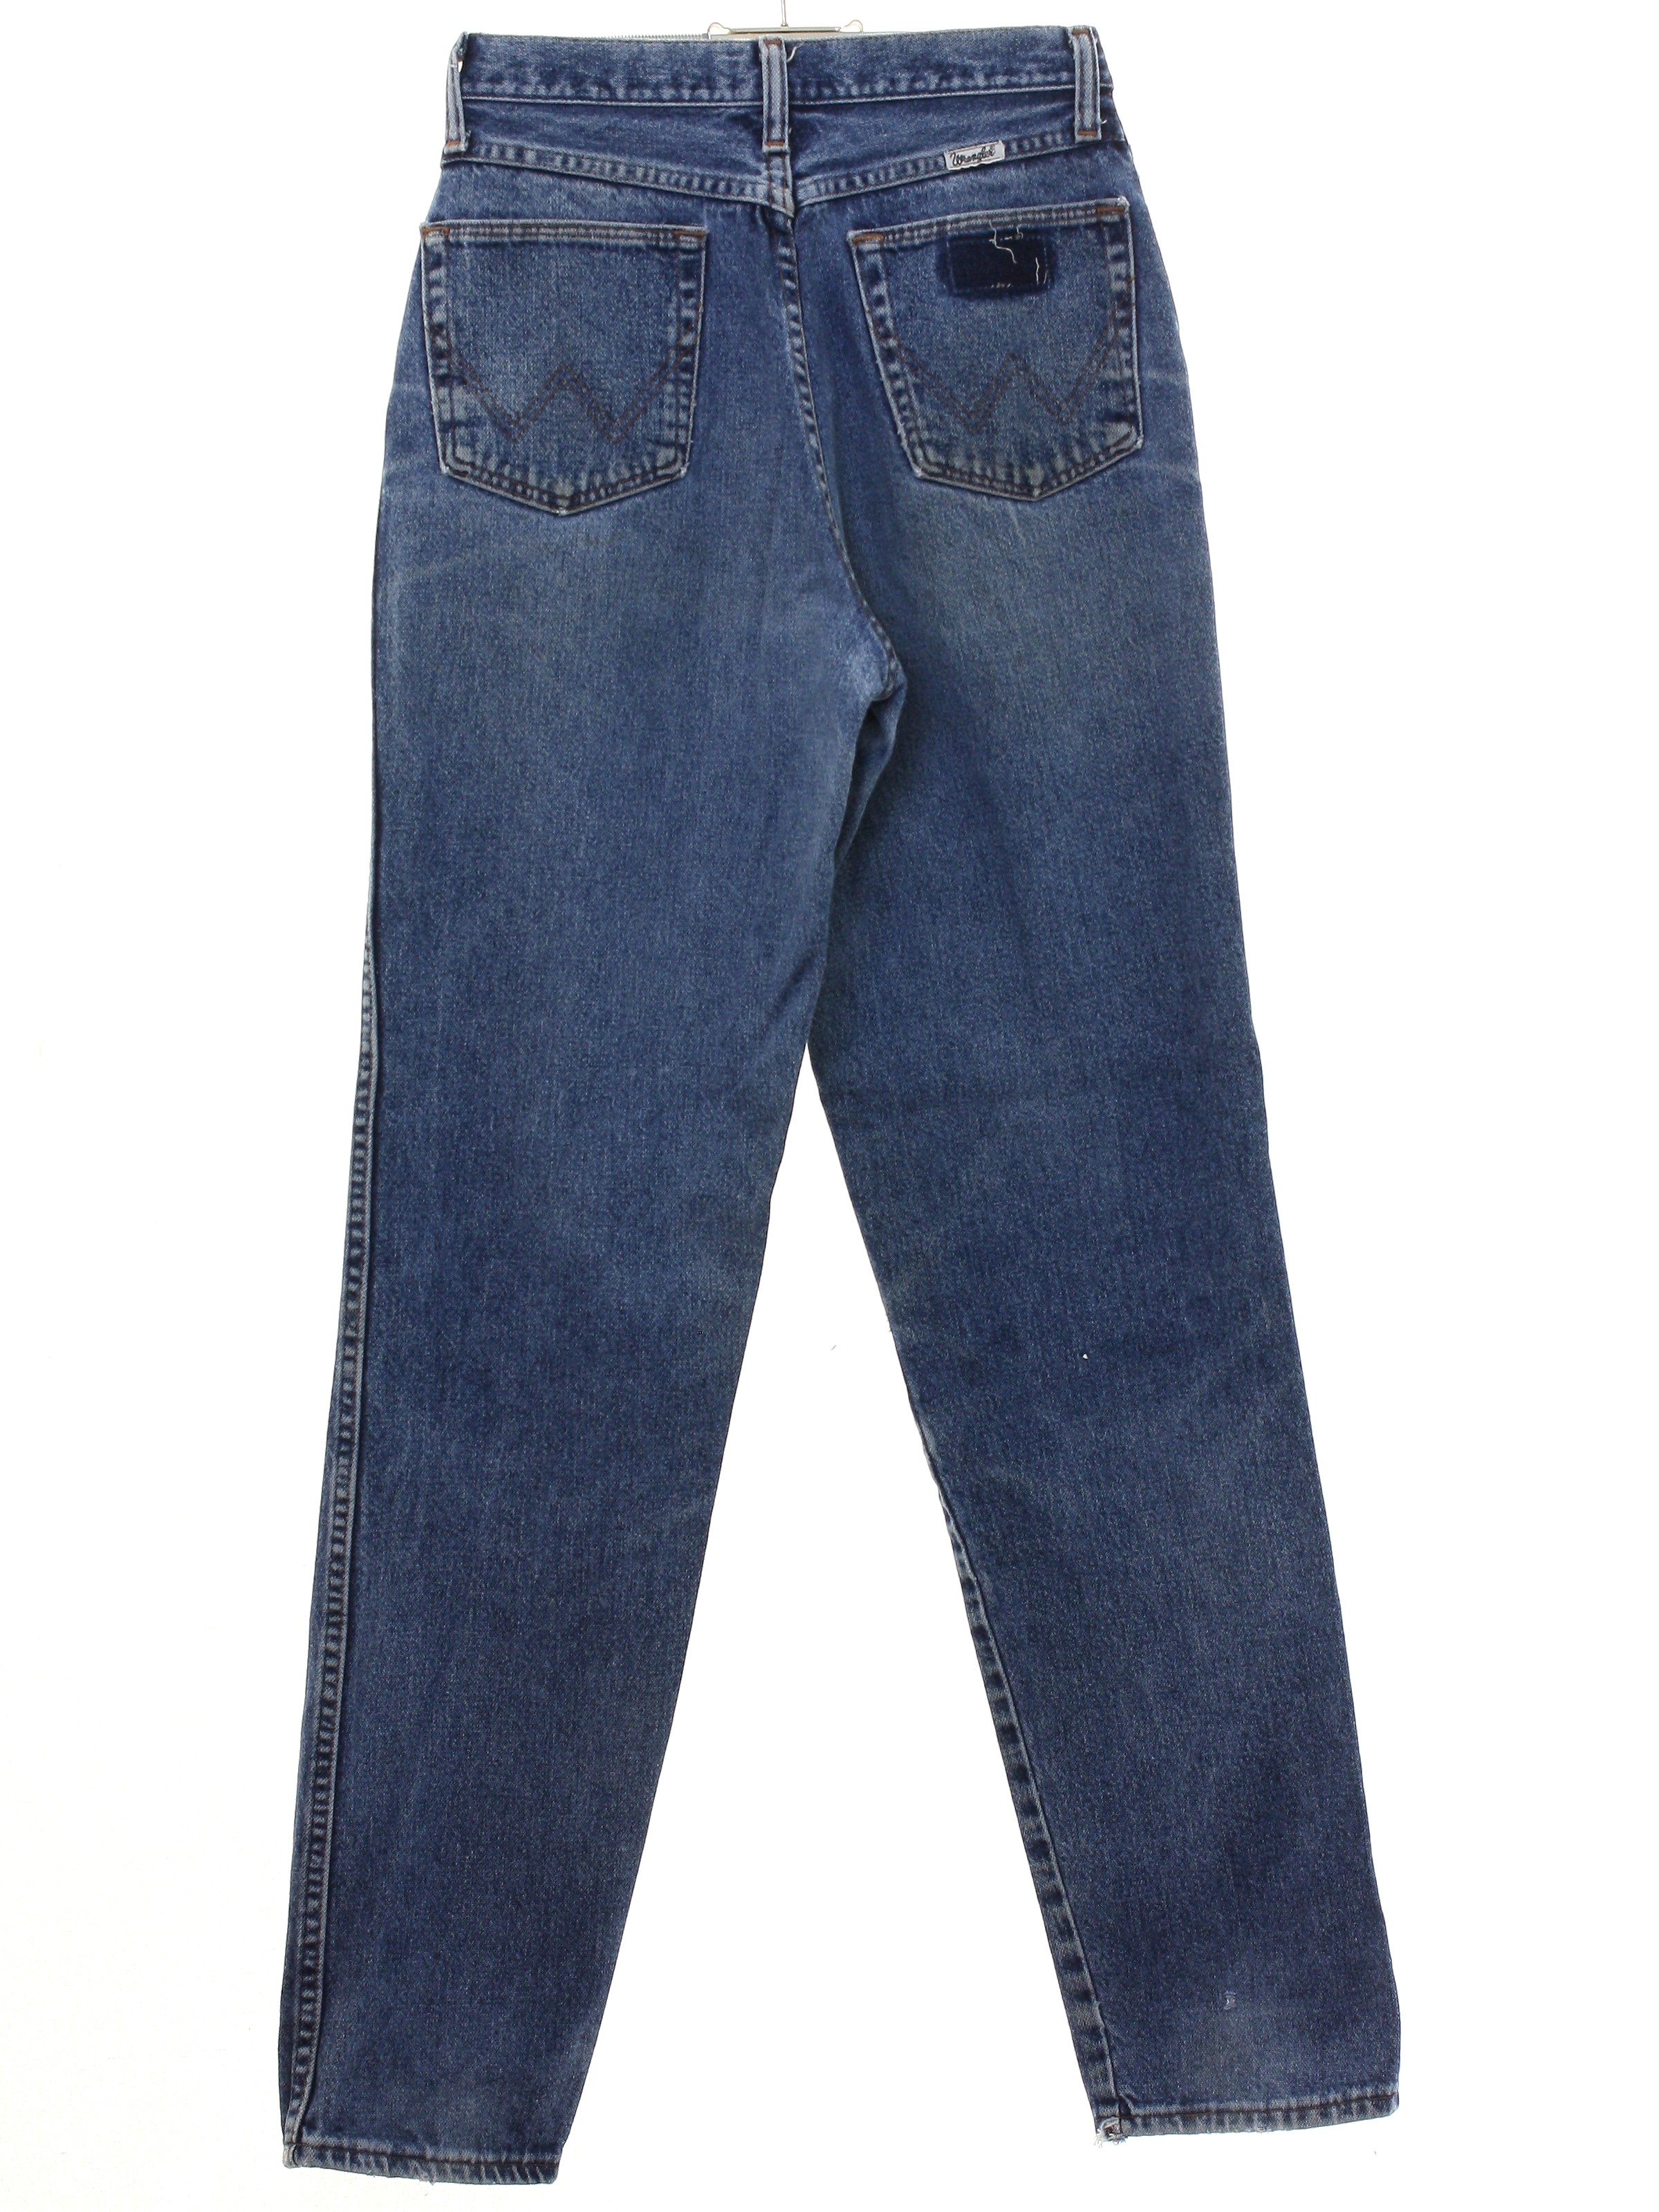 wrangler jeans 80s